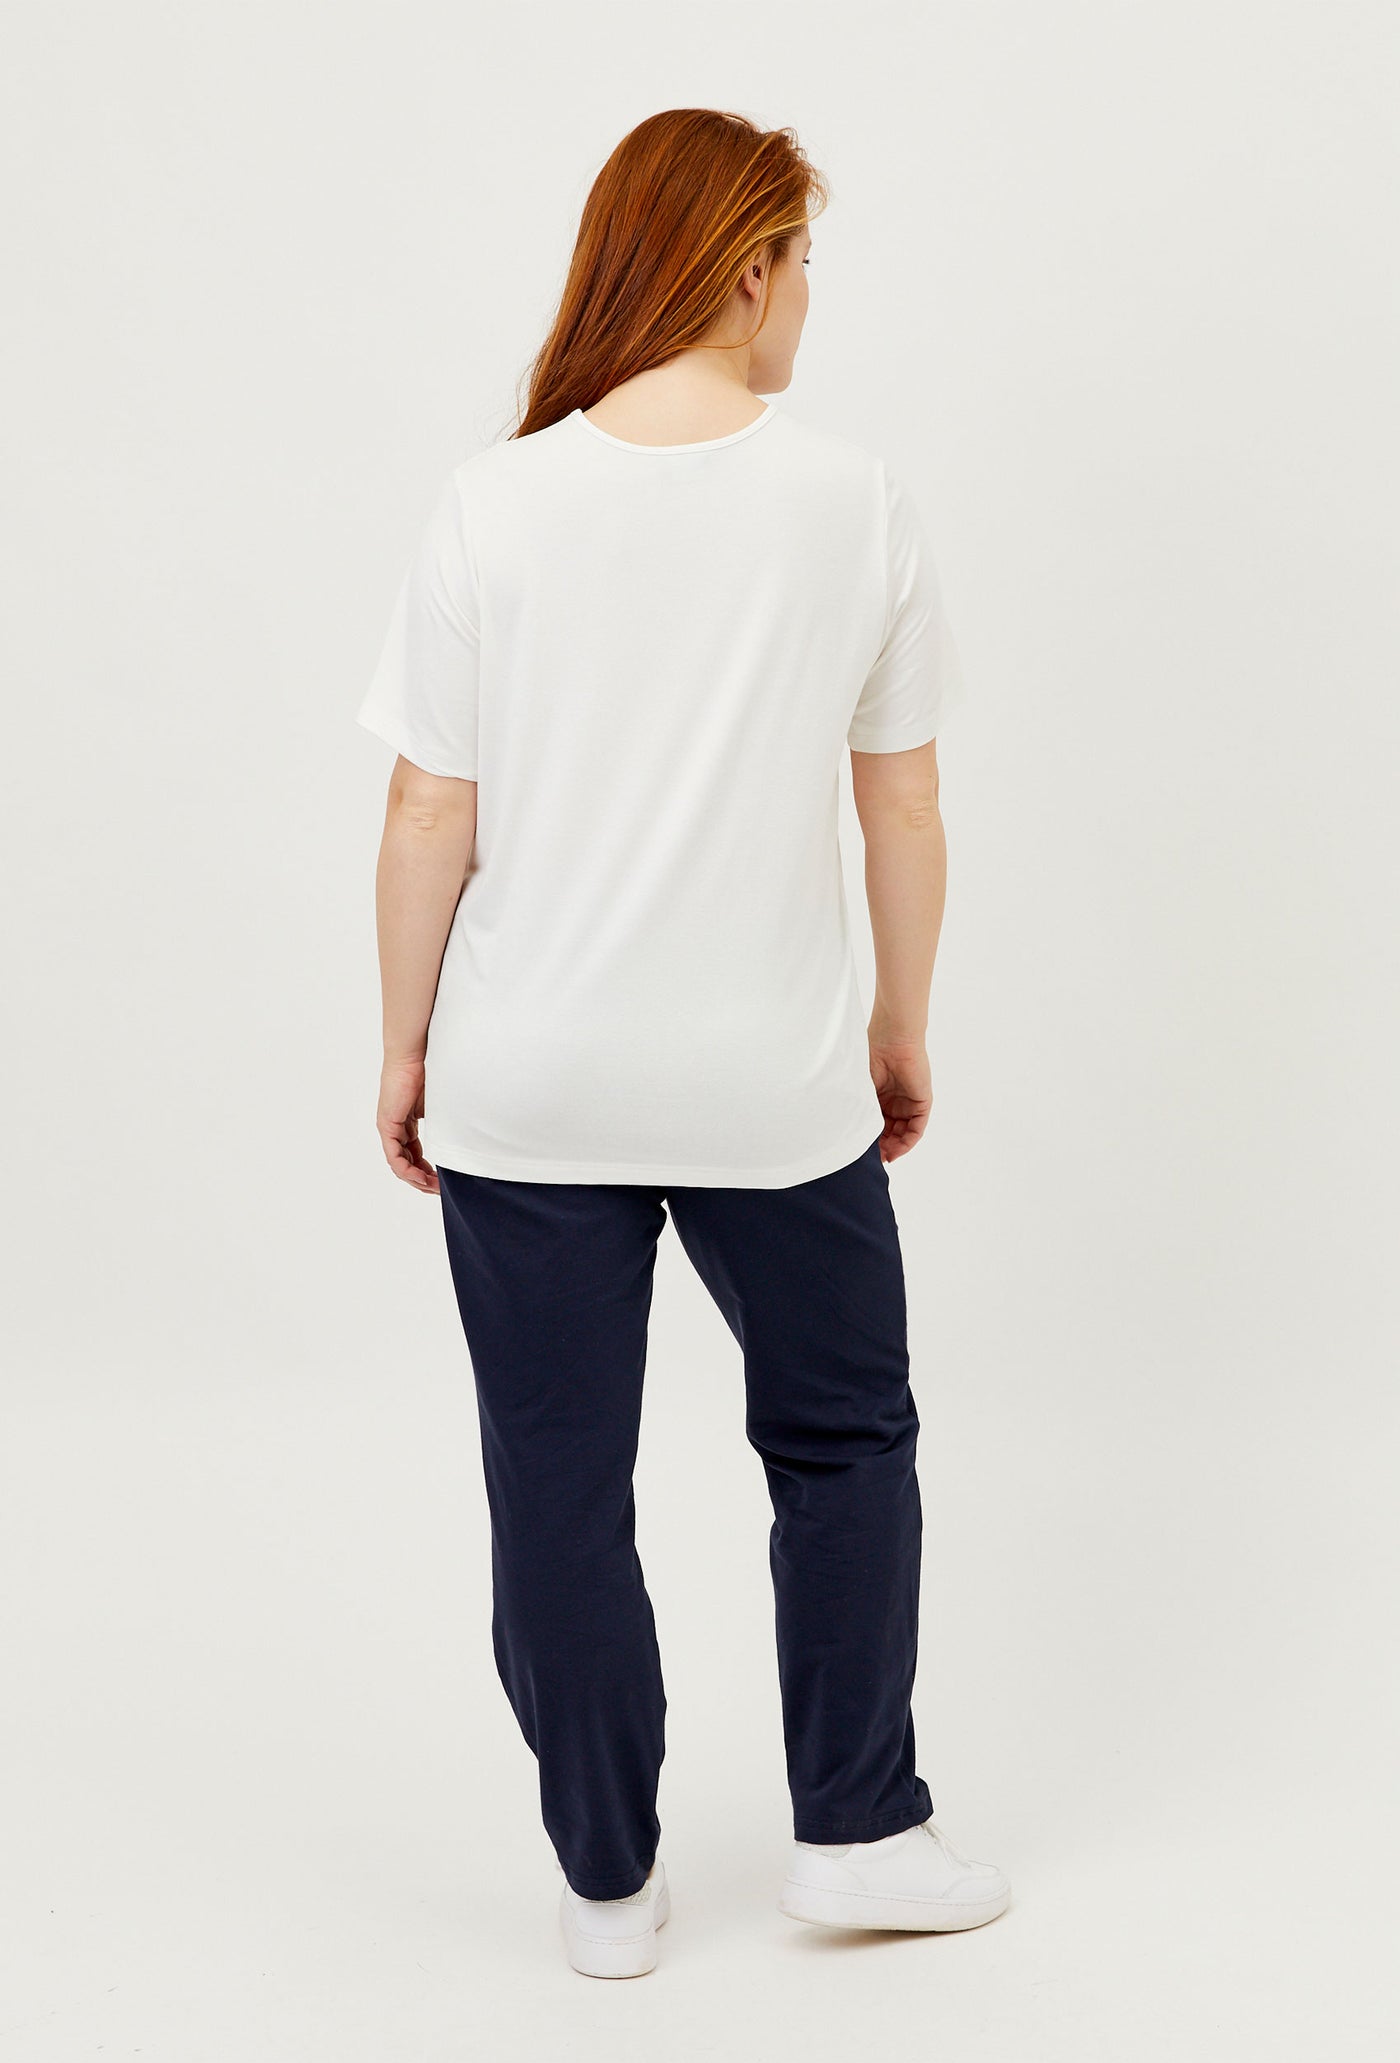 Aprico APBath T-Shirt 002 Optical white